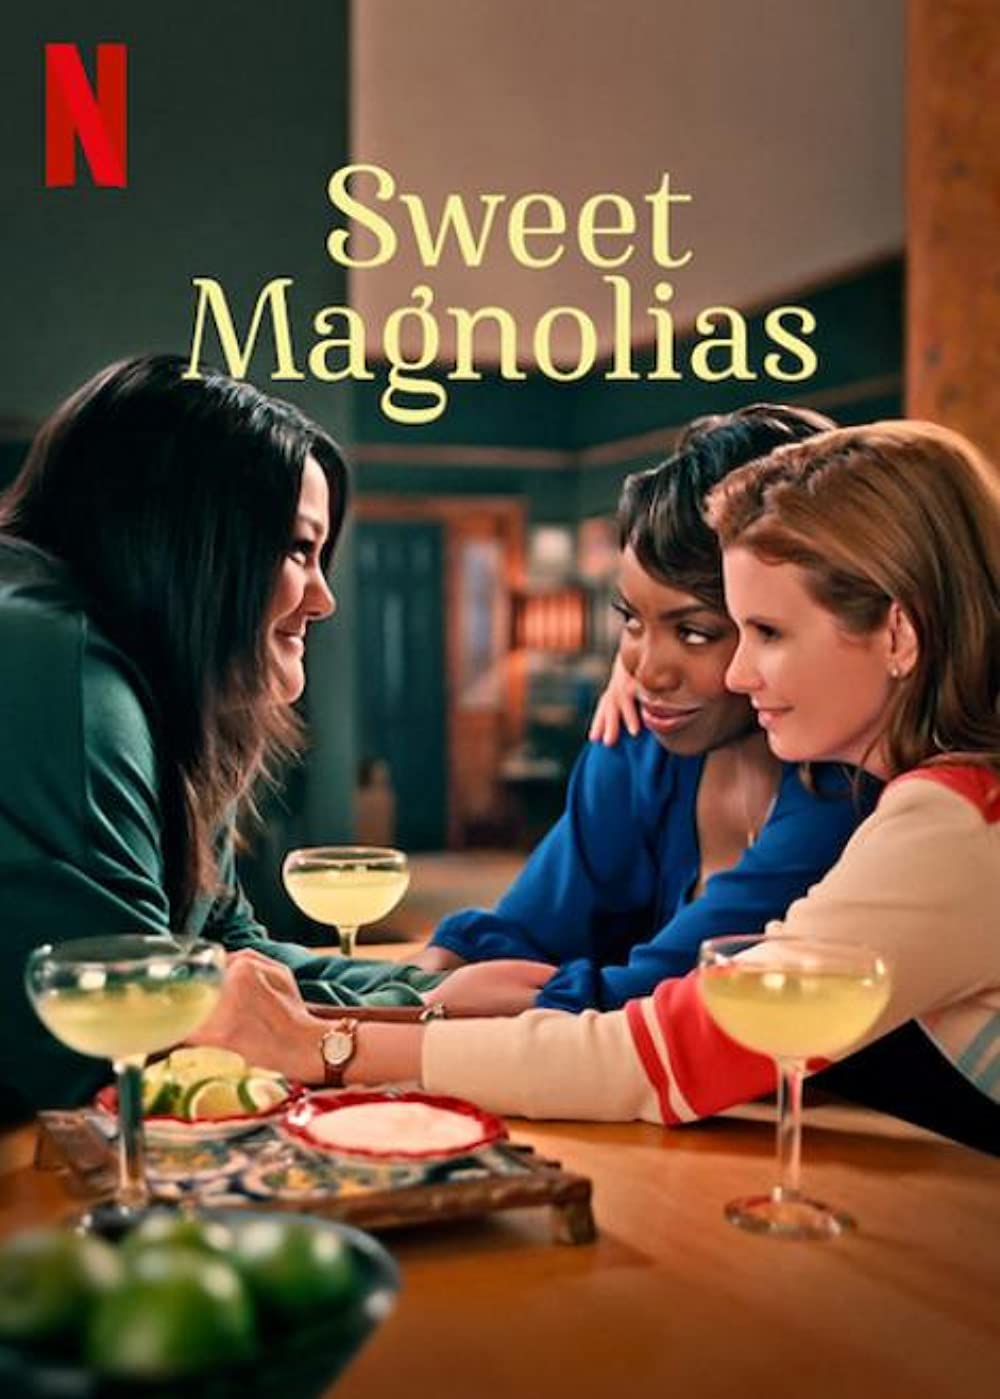 [TV] Sweet Magnolias Season 2 (Netflix)